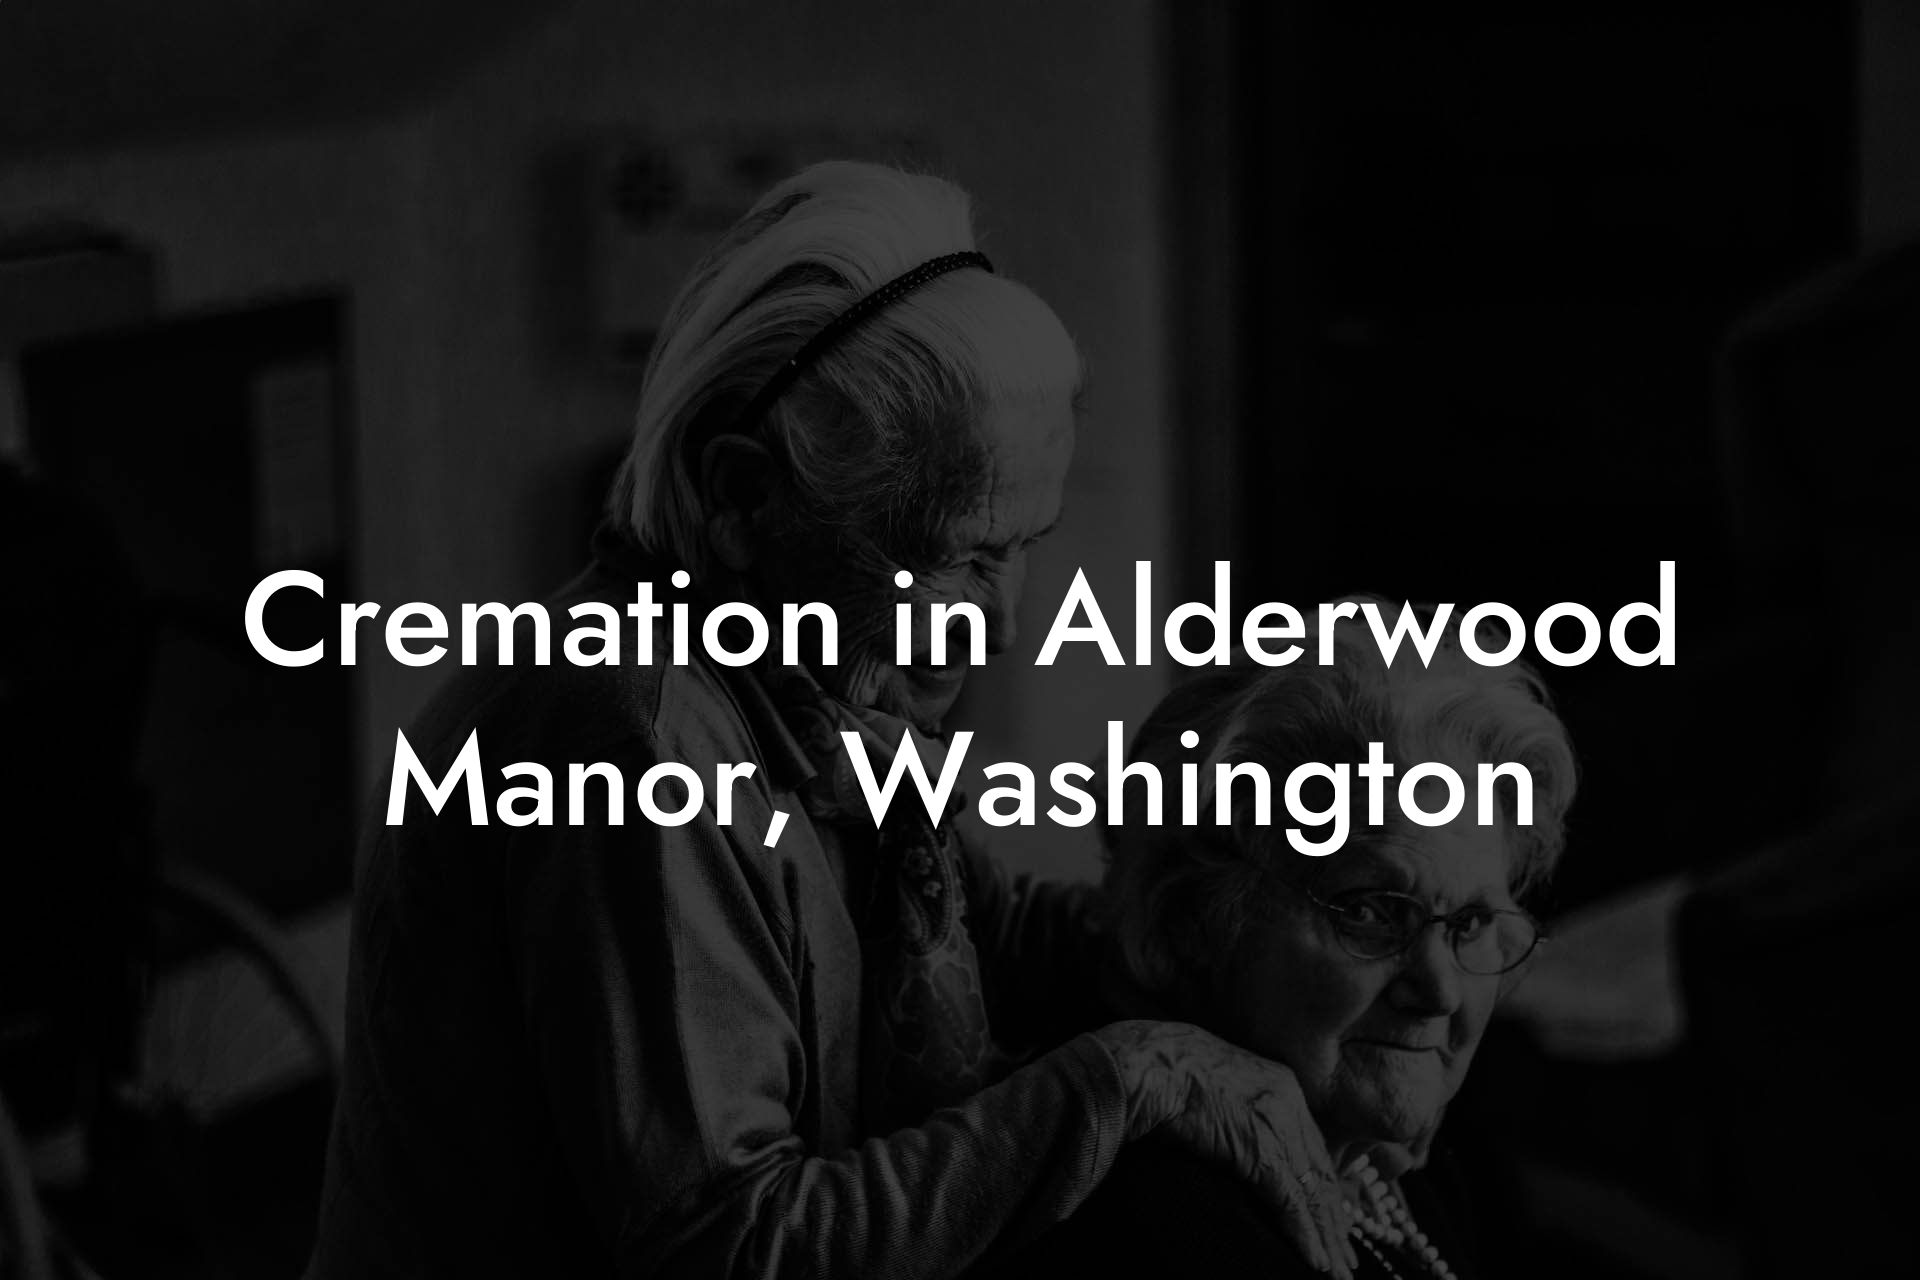 Cremation in Alderwood Manor, Washington